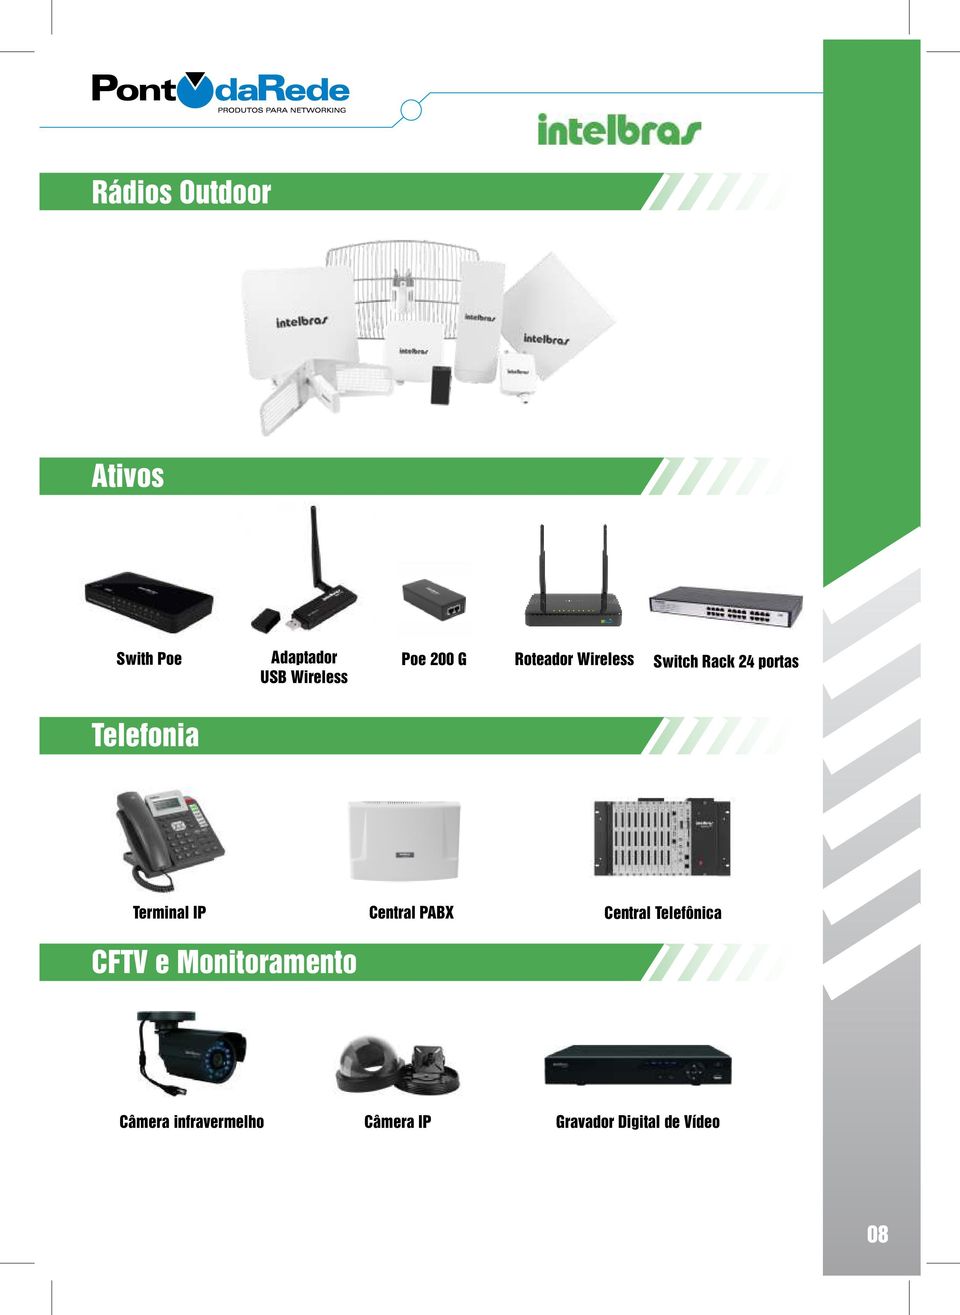 Terminal IP CFTV e Monitoramento Central PABX Central